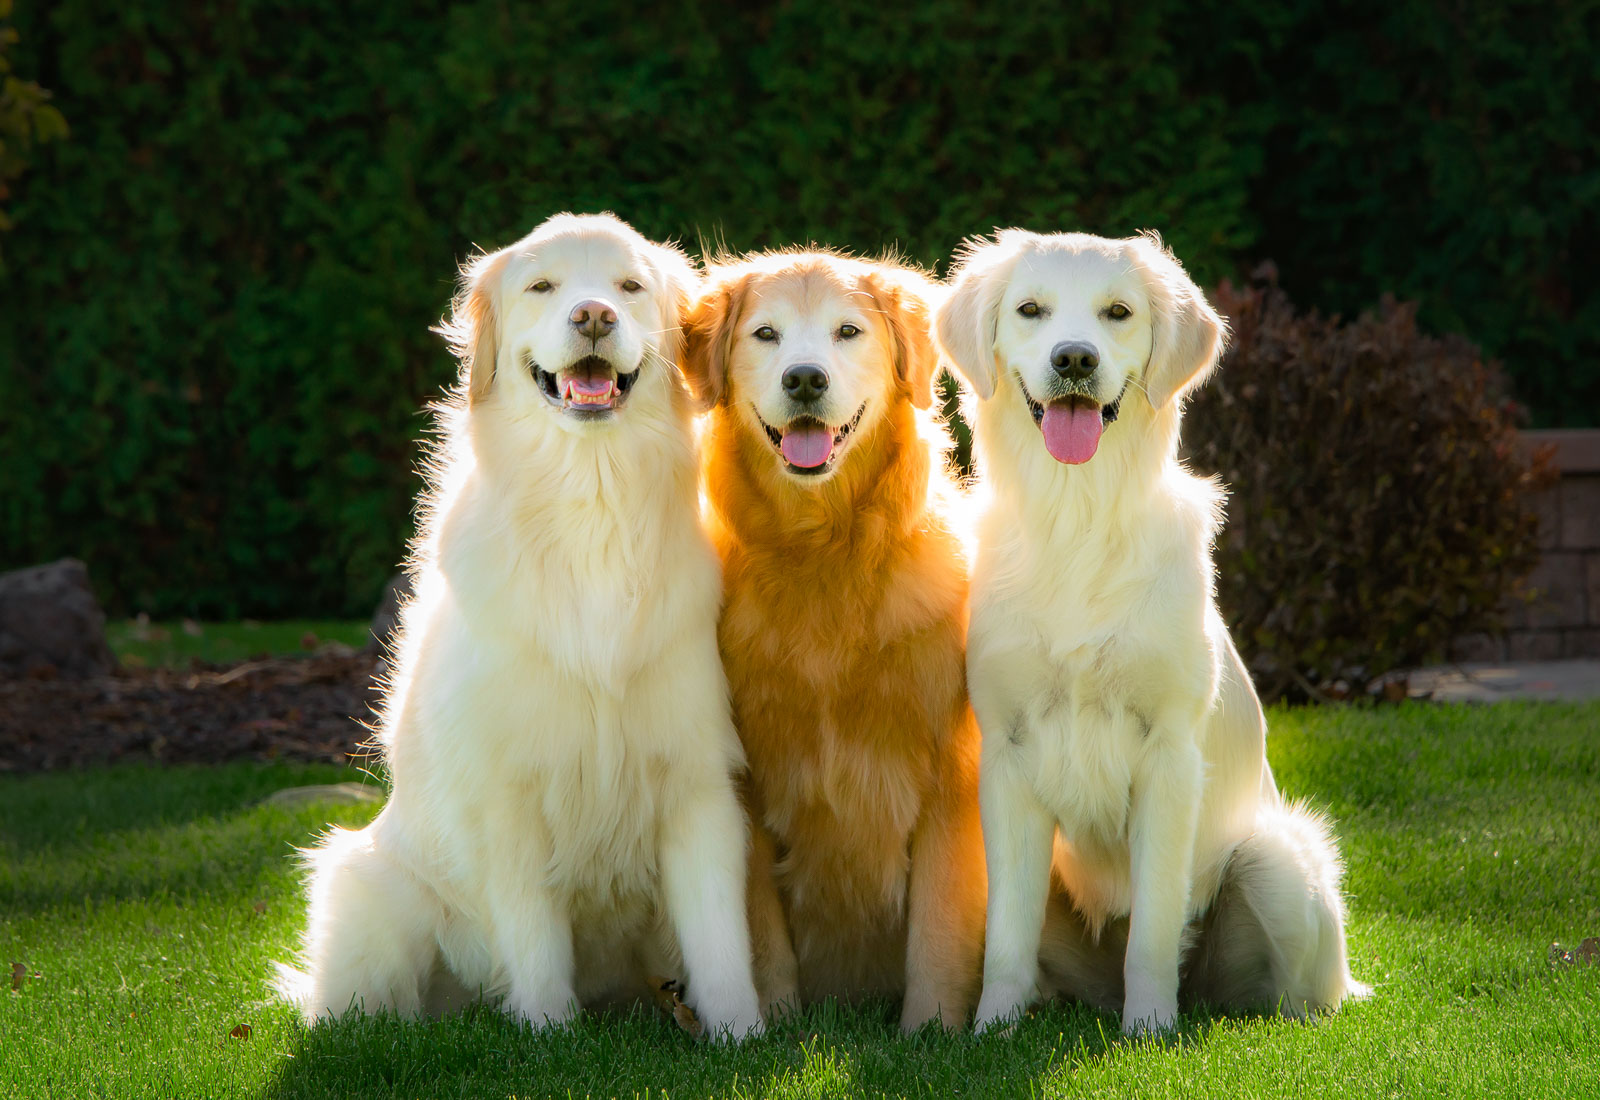 Three Golden Retrievers smiling in the sun